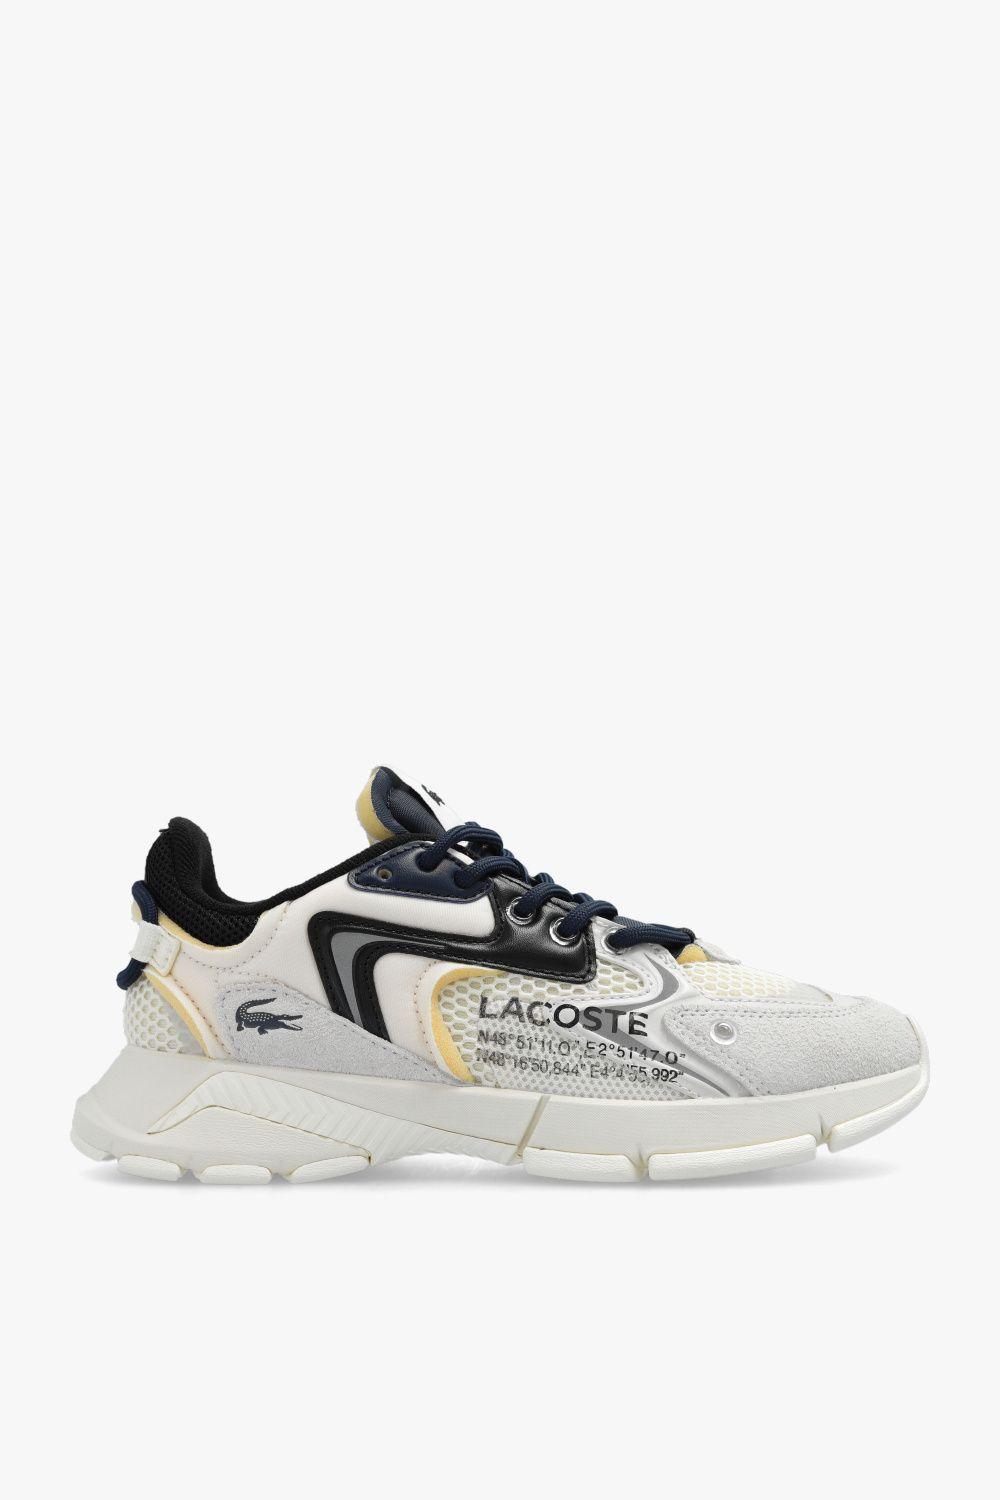 Lacoste 'l003 Neo' Sneakers in White | Lyst